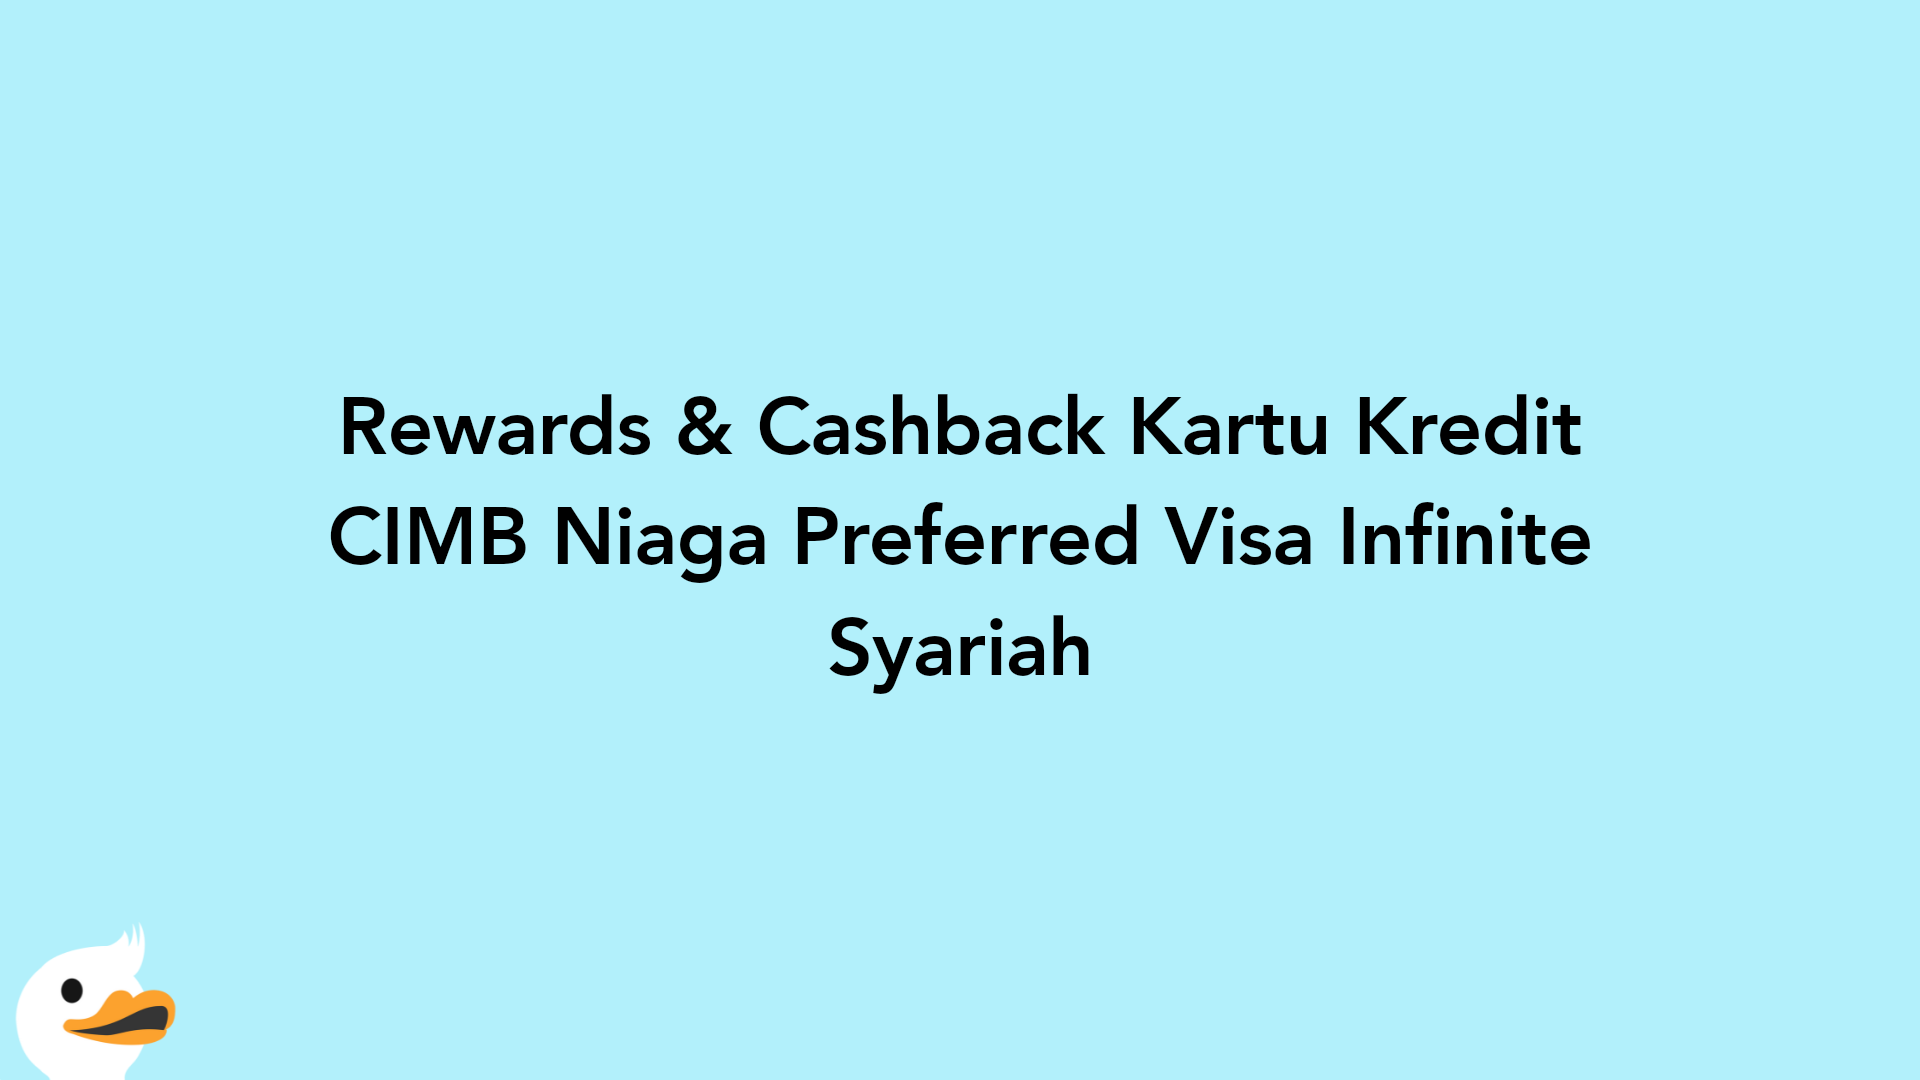 Rewards & Cashback Kartu Kredit CIMB Niaga Preferred Visa Infinite Syariah